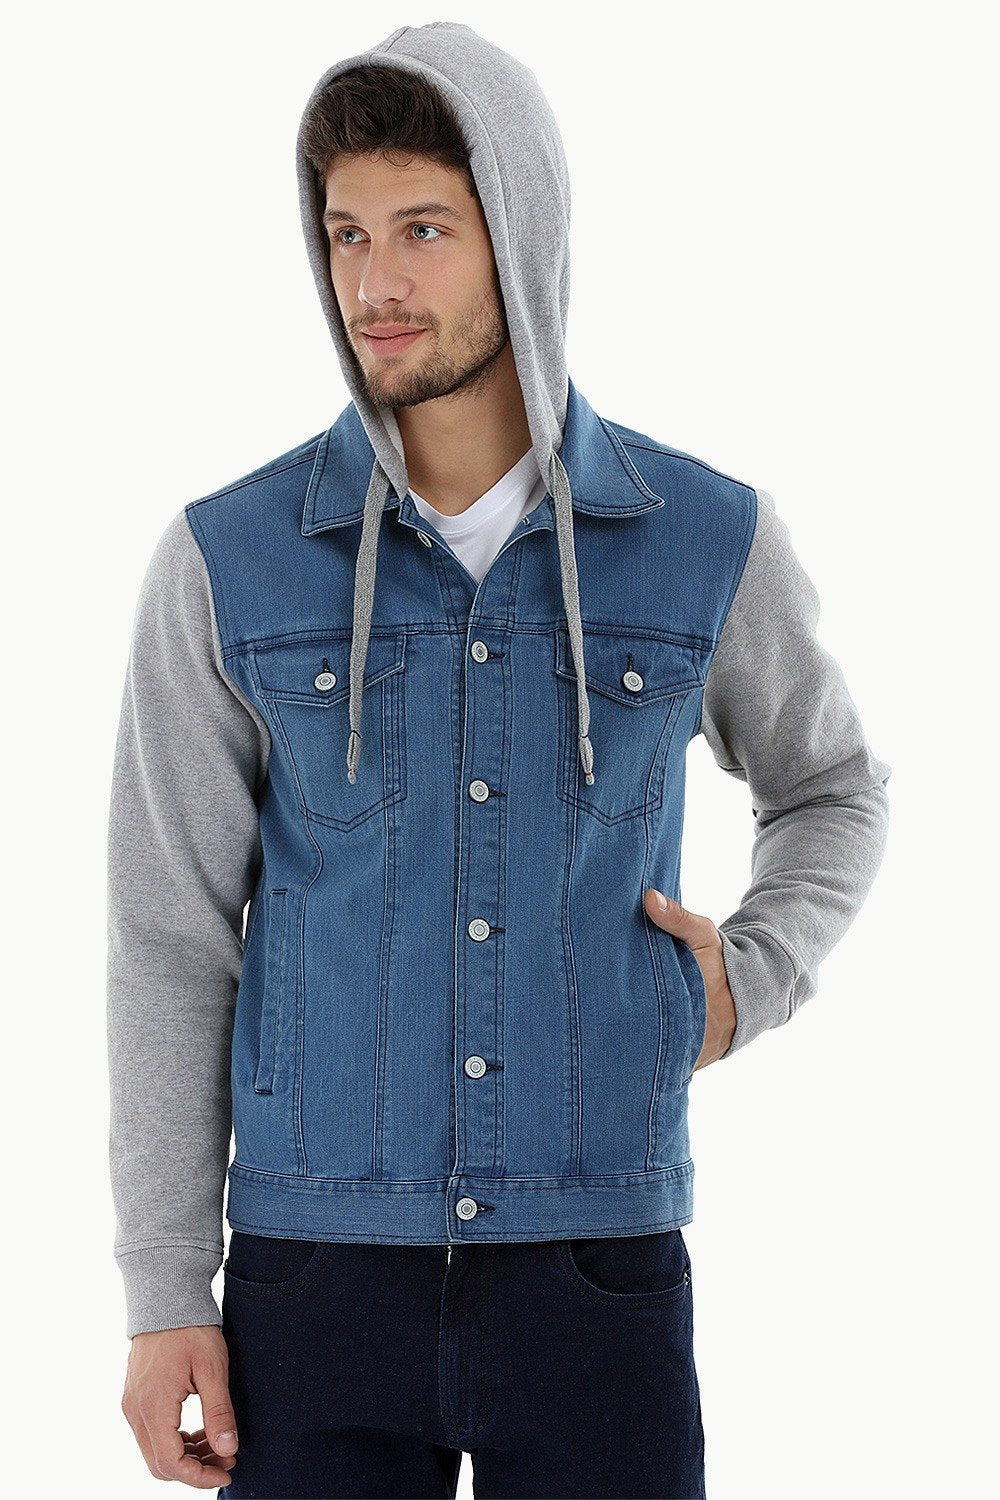 Buy Online Midwashed Indigo Hooded Denim Jacket for Men Online at Zobello